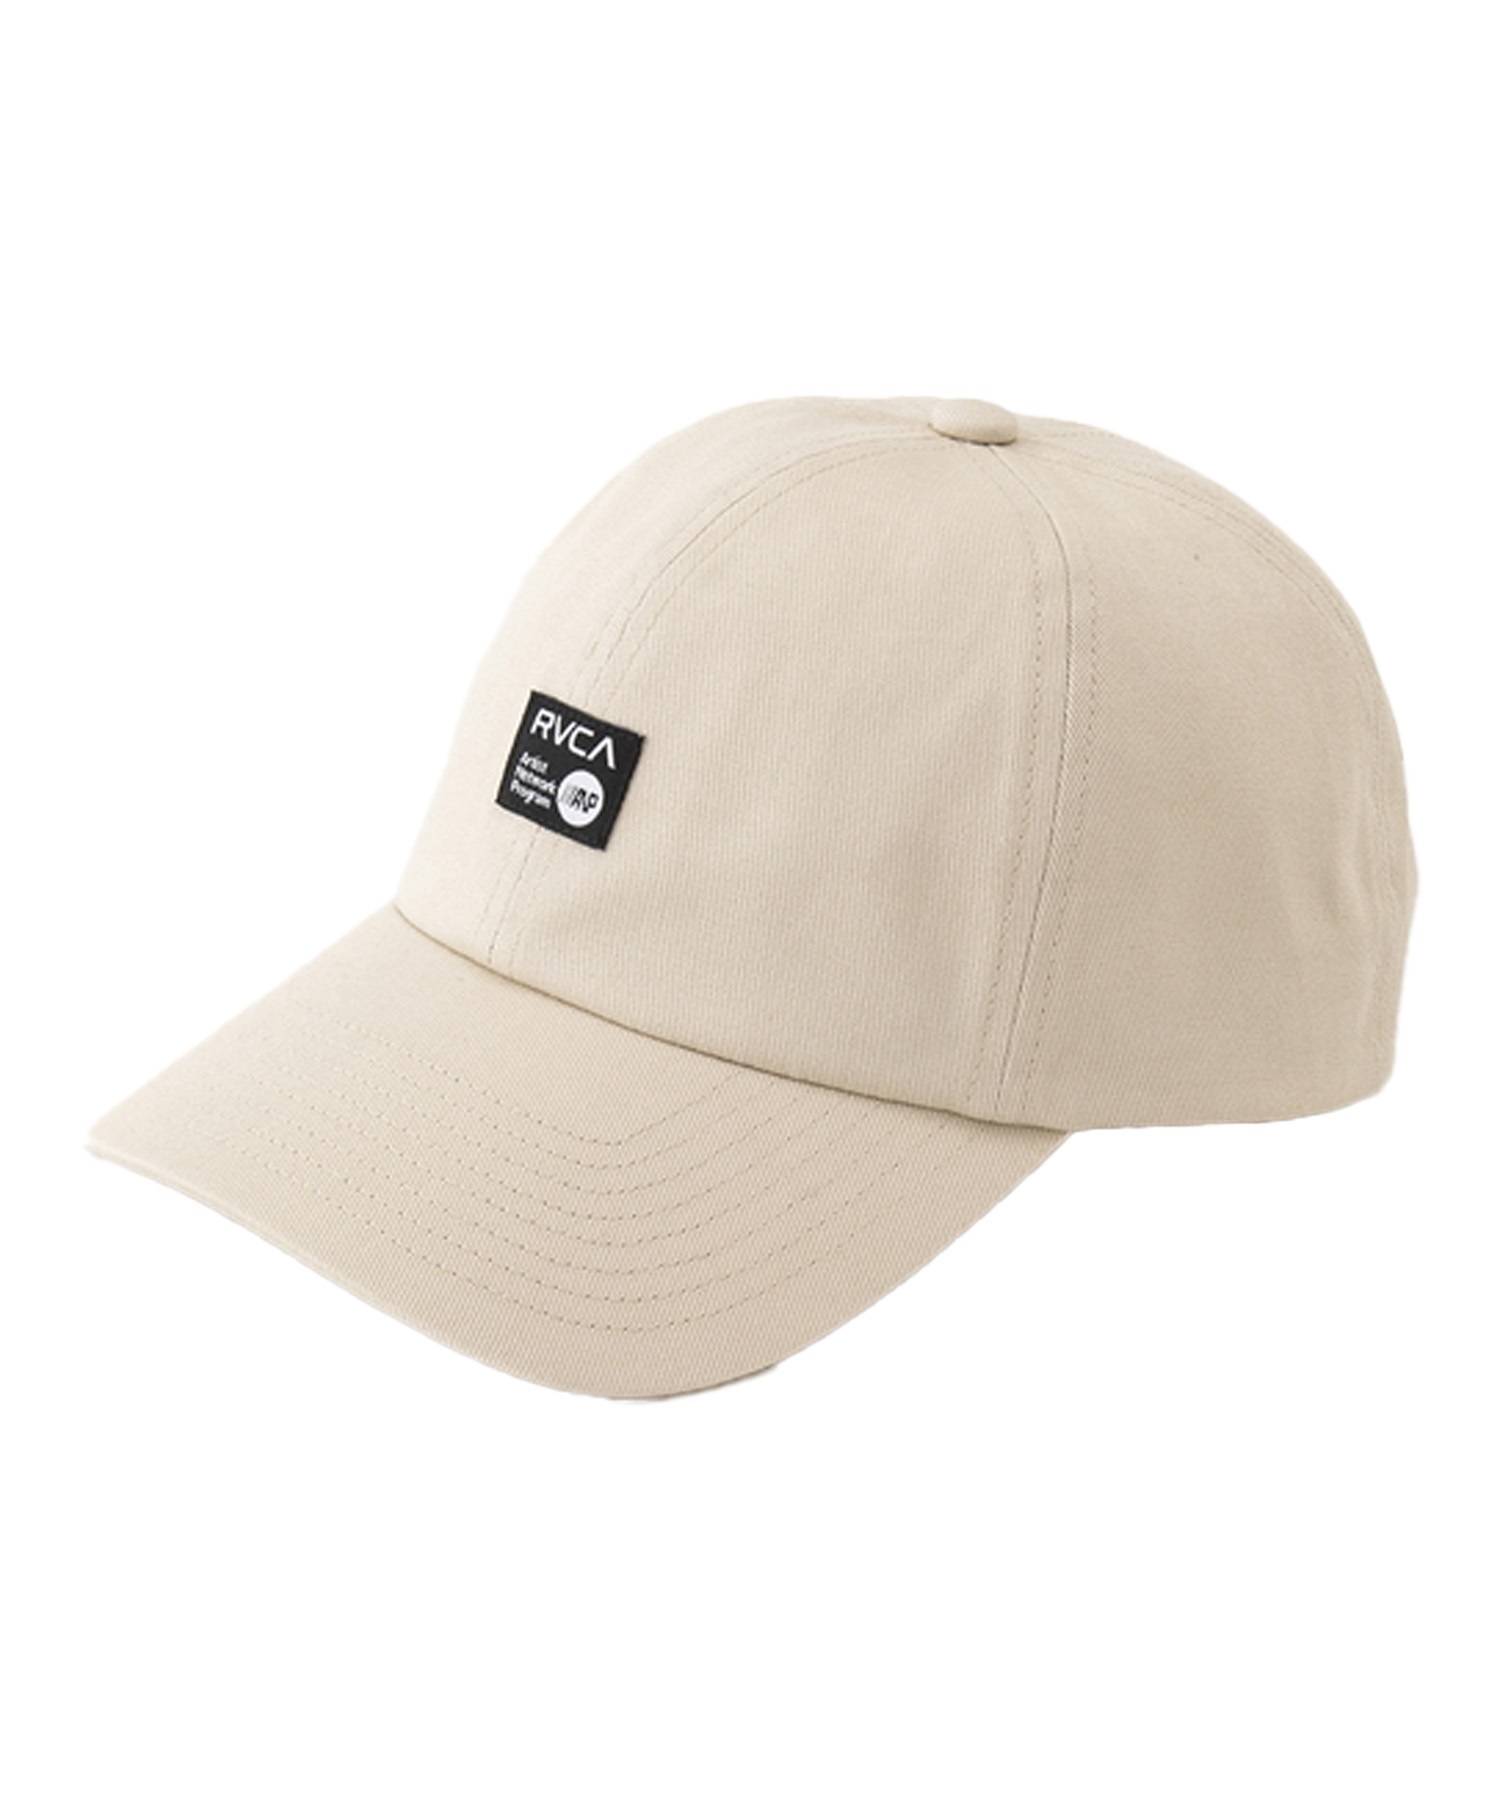 RVCA/ルーカ VICES SNAPBACK キャップ 帽子 フリーサイズ BE041-923(BLK-FREE)